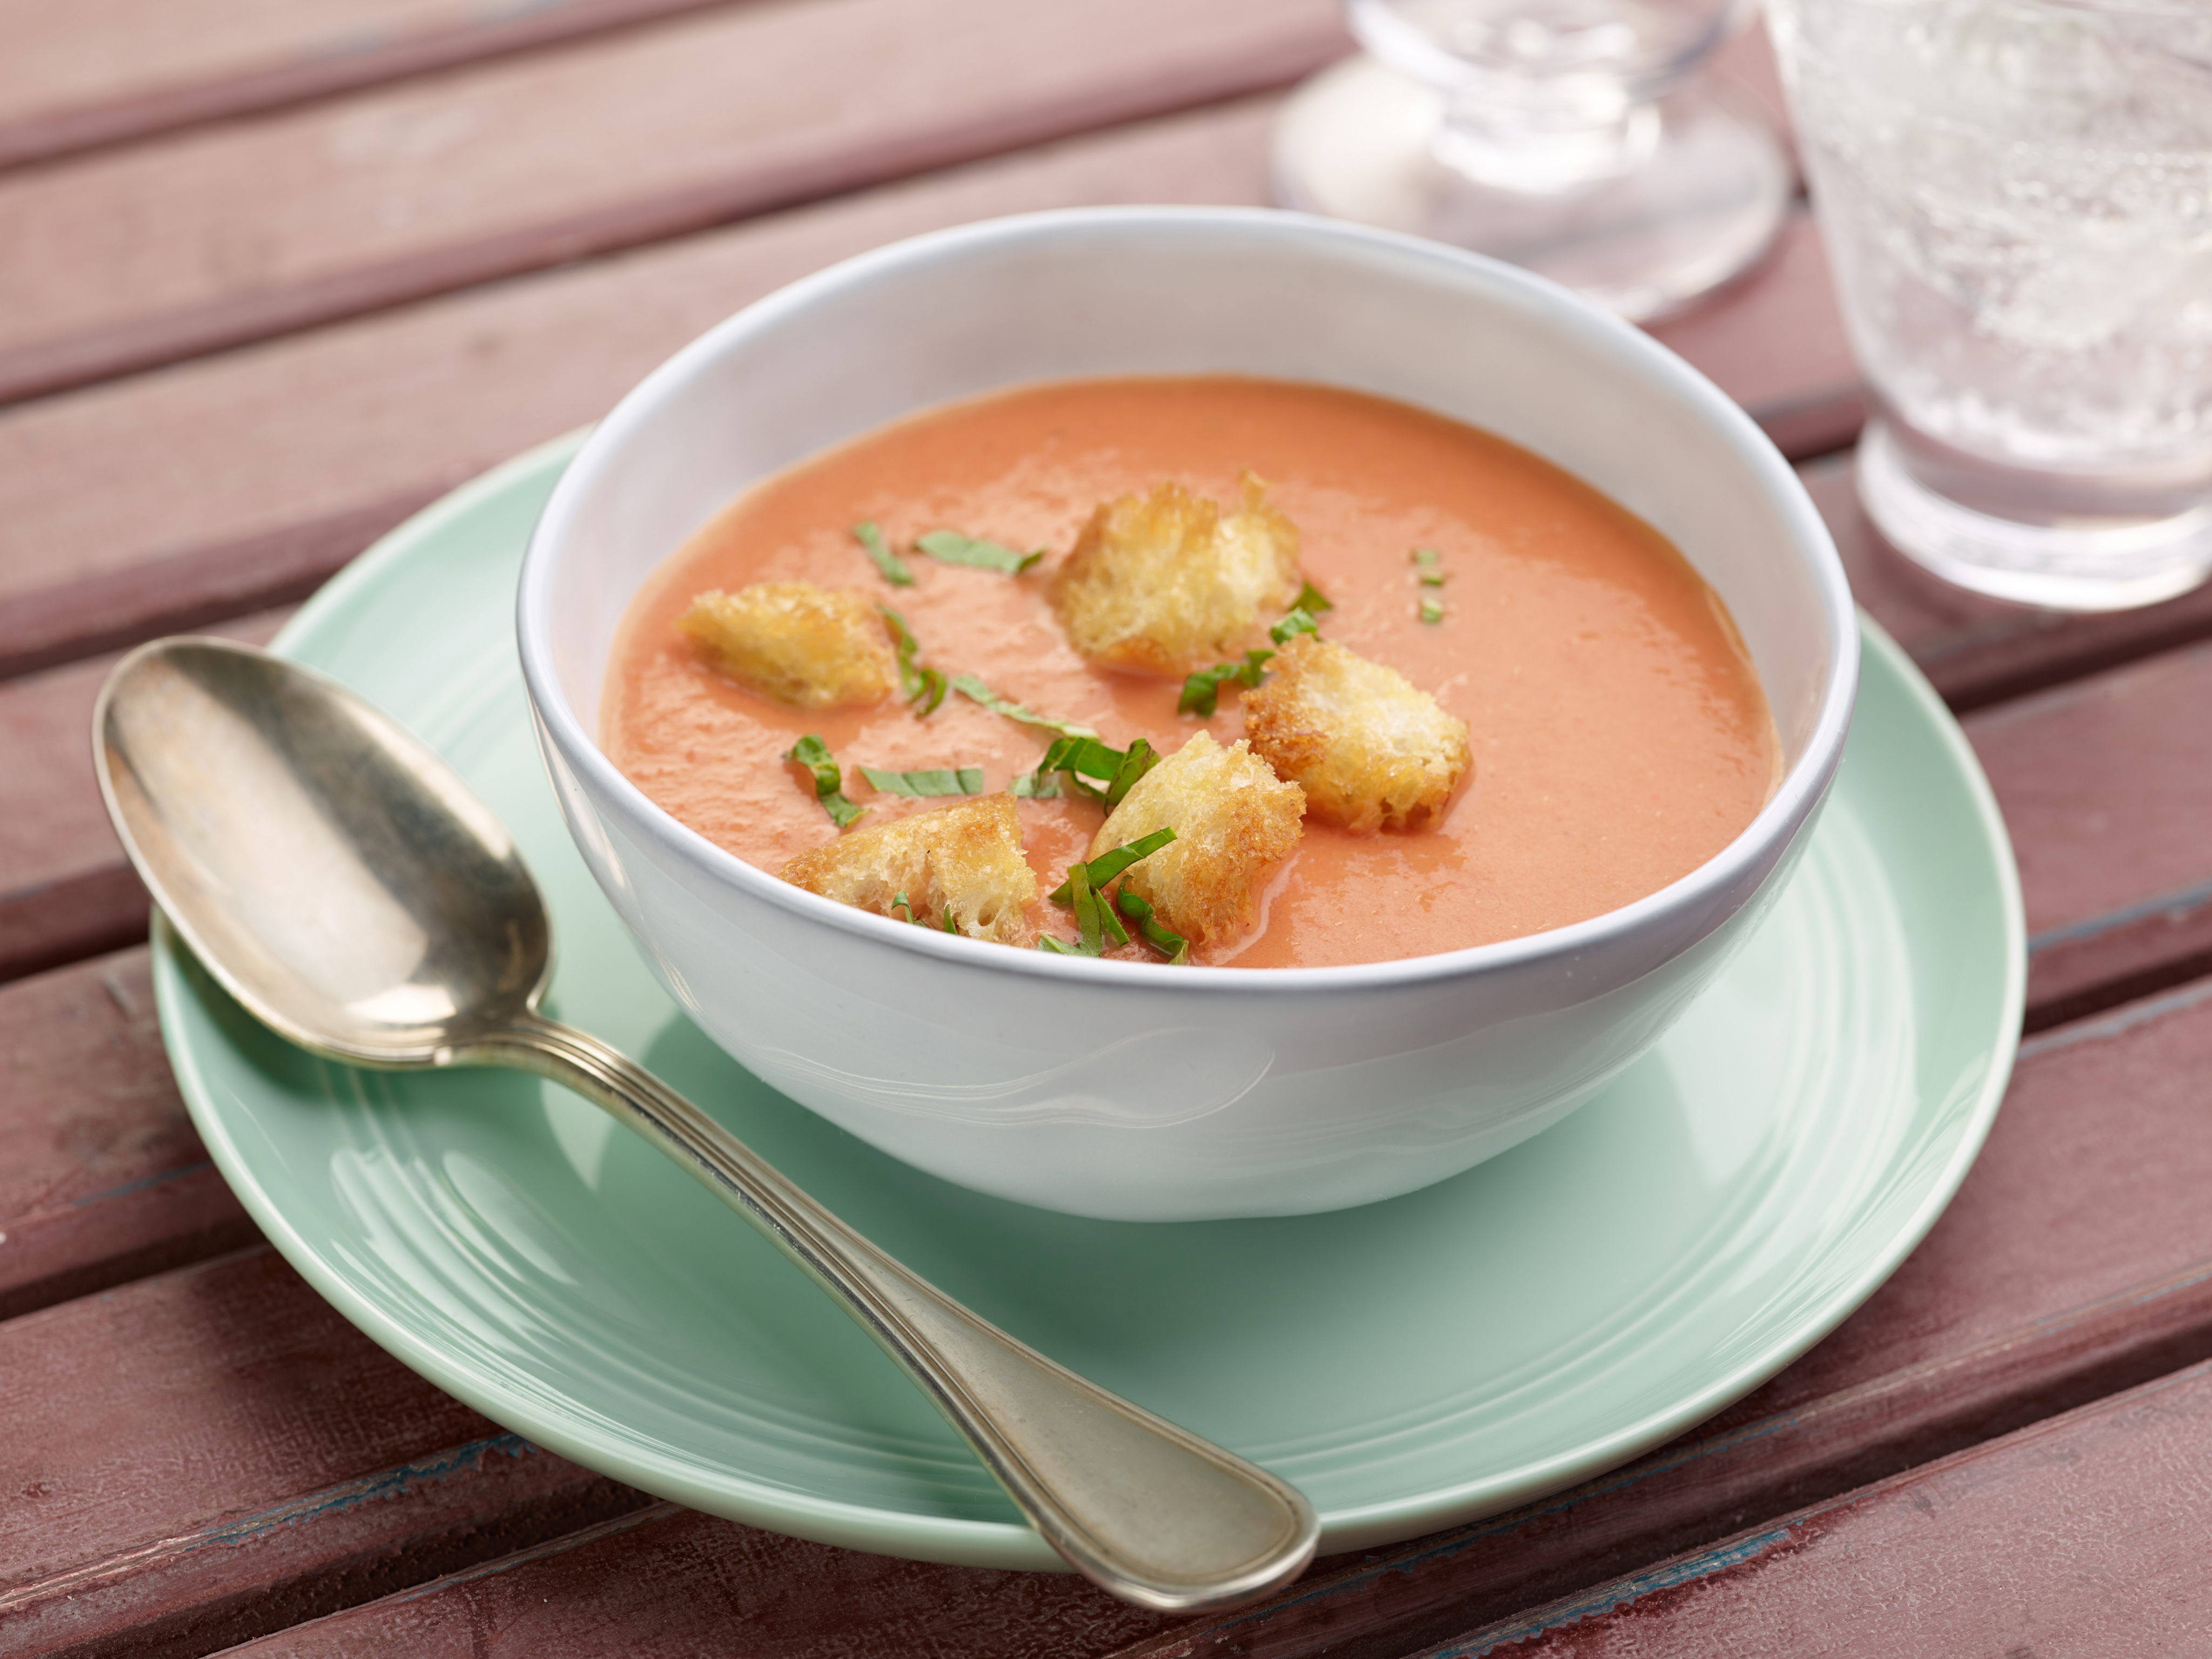 https://www.foodnetwork.com/content/dam/images/food/fullset/2014/3/5/1/BX0203H_Cream-of-Fresh-Tomato-Soup_s4x3.jpg